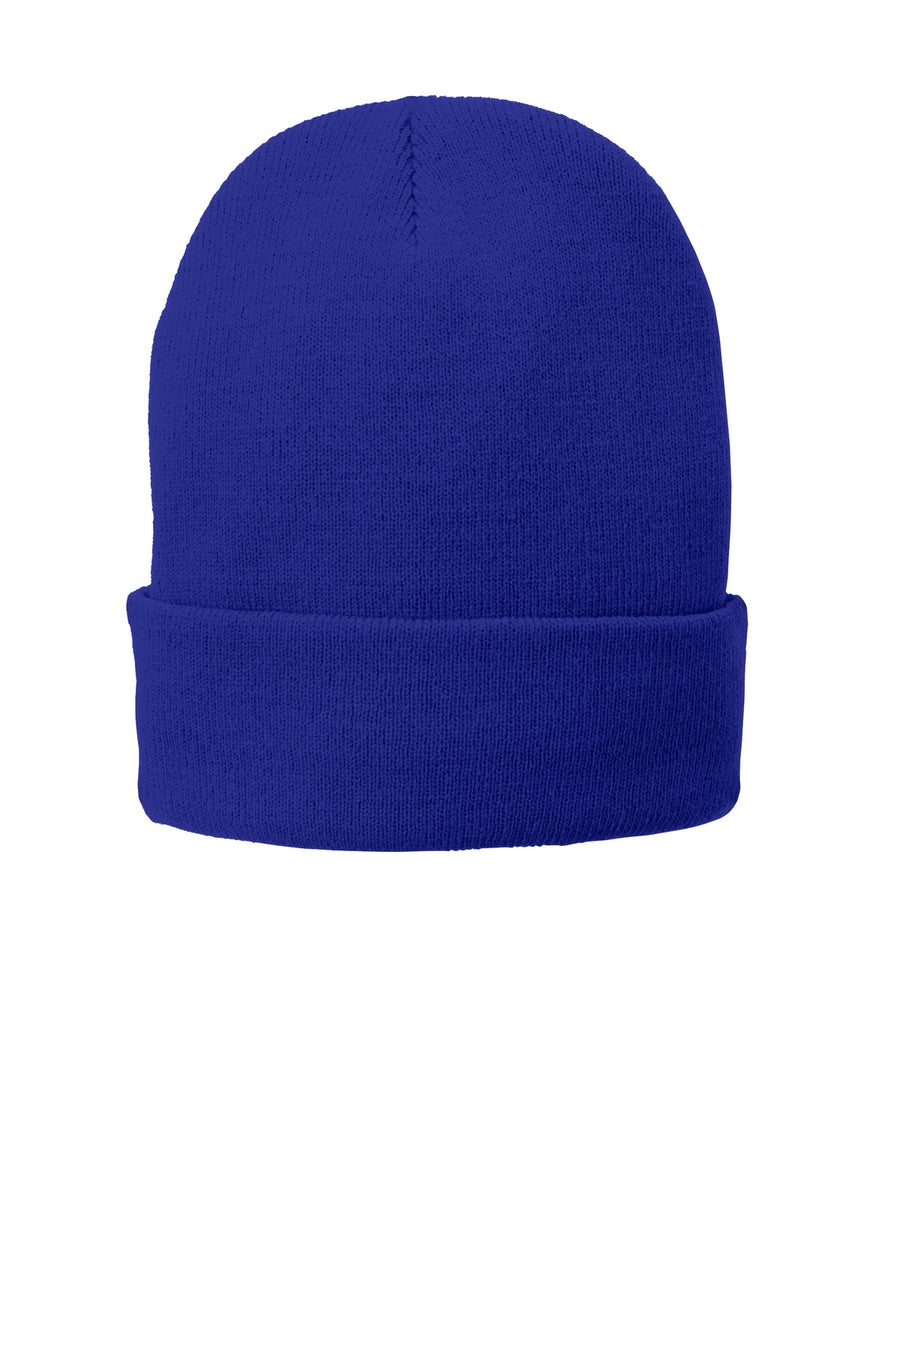 Port & Company Fleece-Lined Knit Cap.